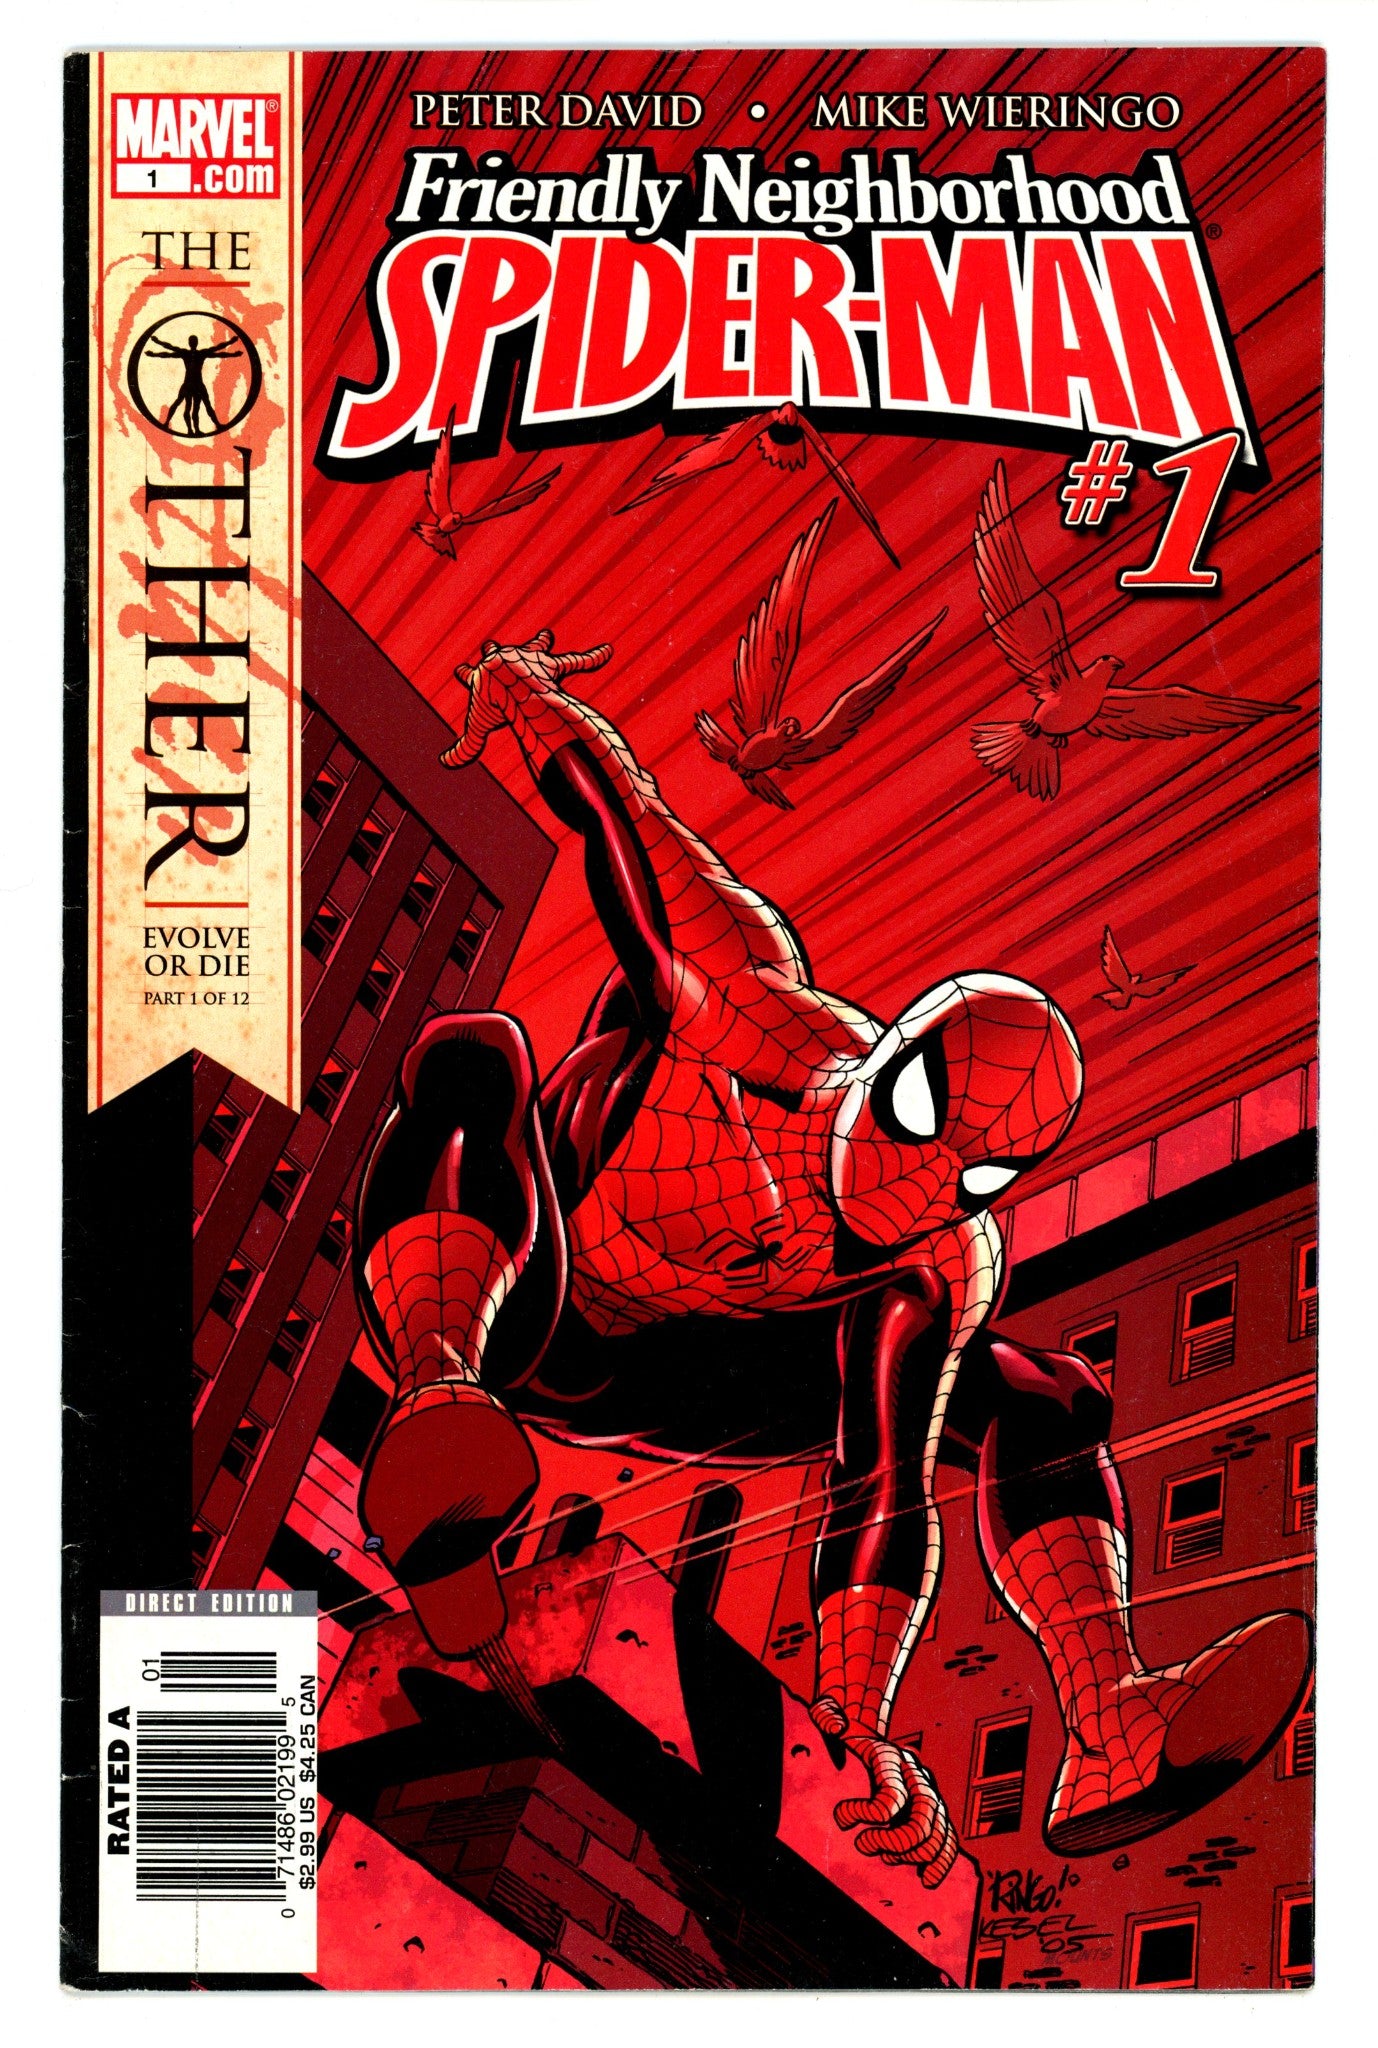 Friendly Neighborhood Spider-Man Vol 1 1 VG (4.0) Direct Hybrid Error (2005) Newsstand 